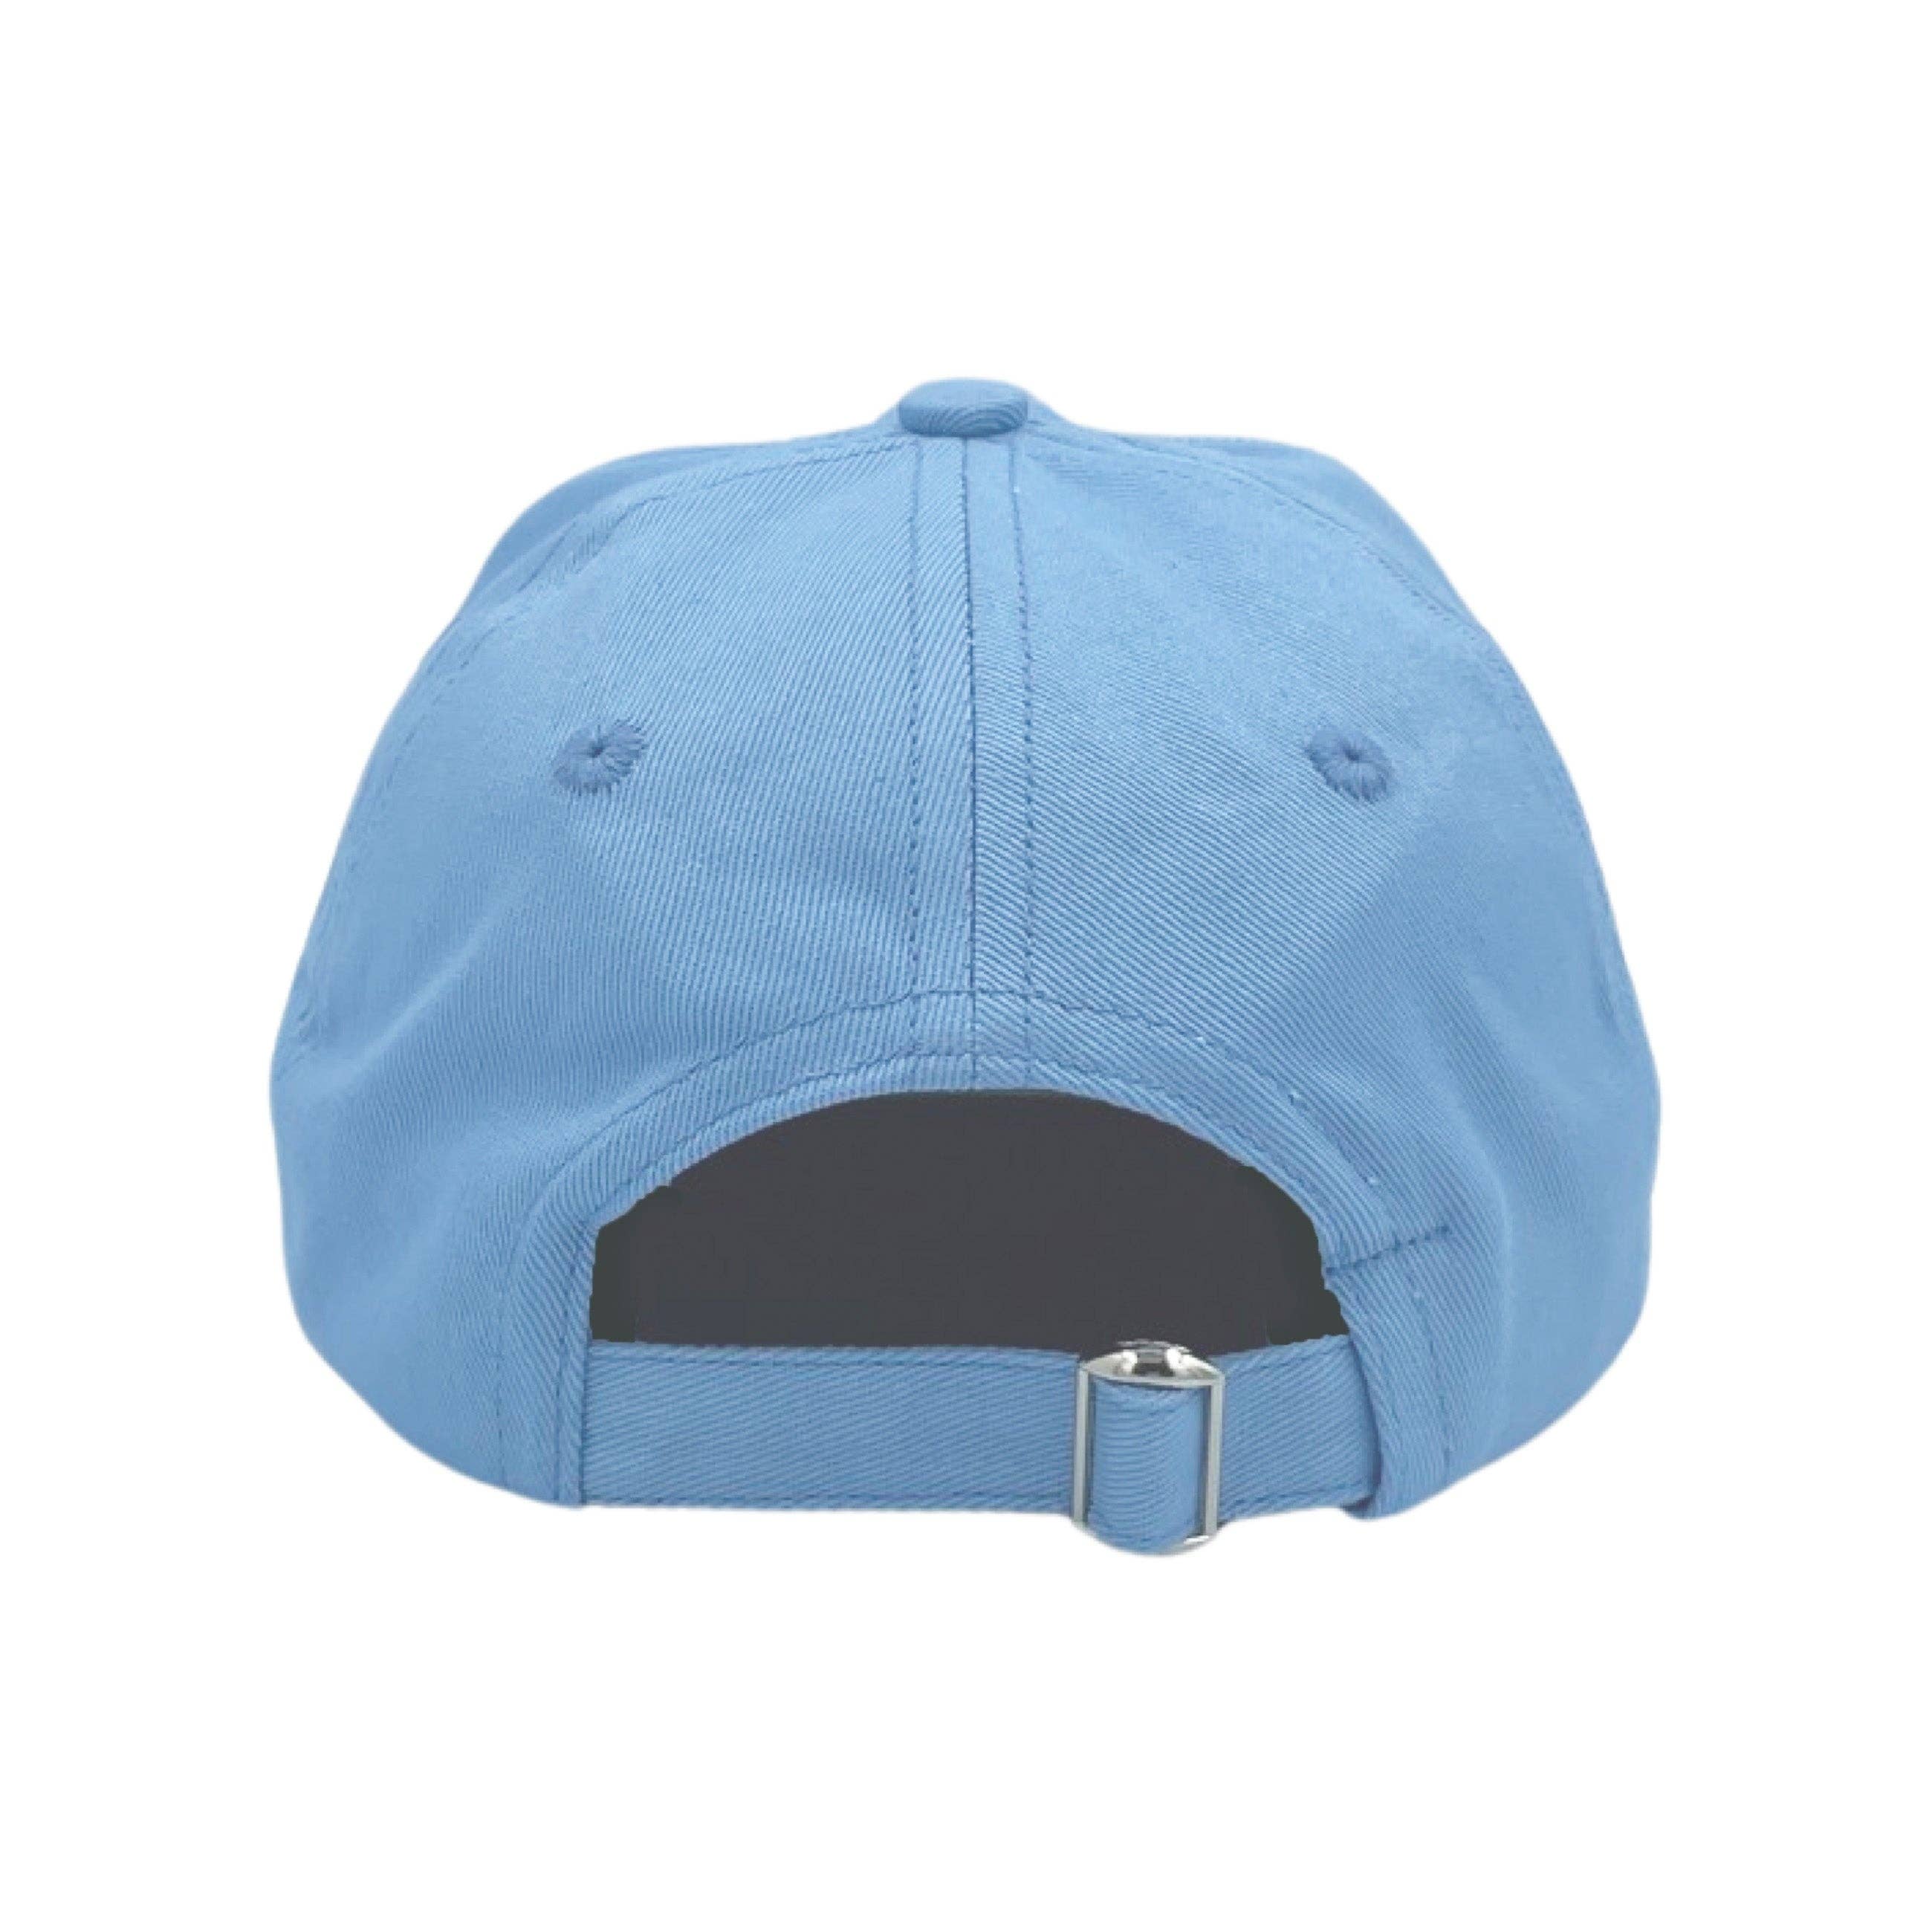 Baseball Hat - Blue